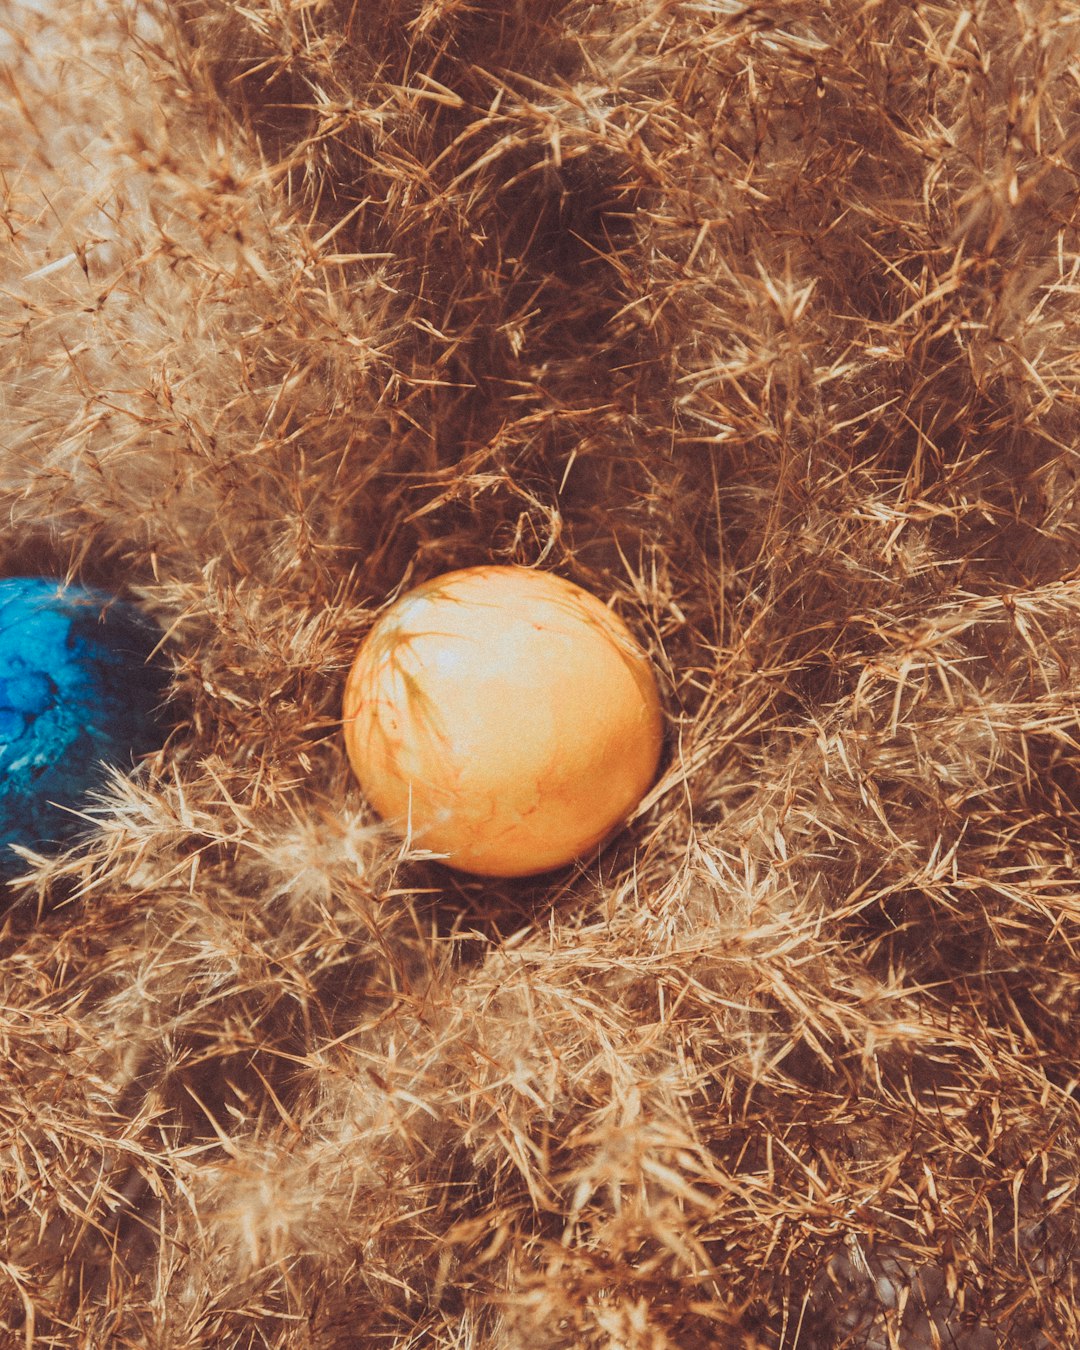 orange and blue egg on brown nest